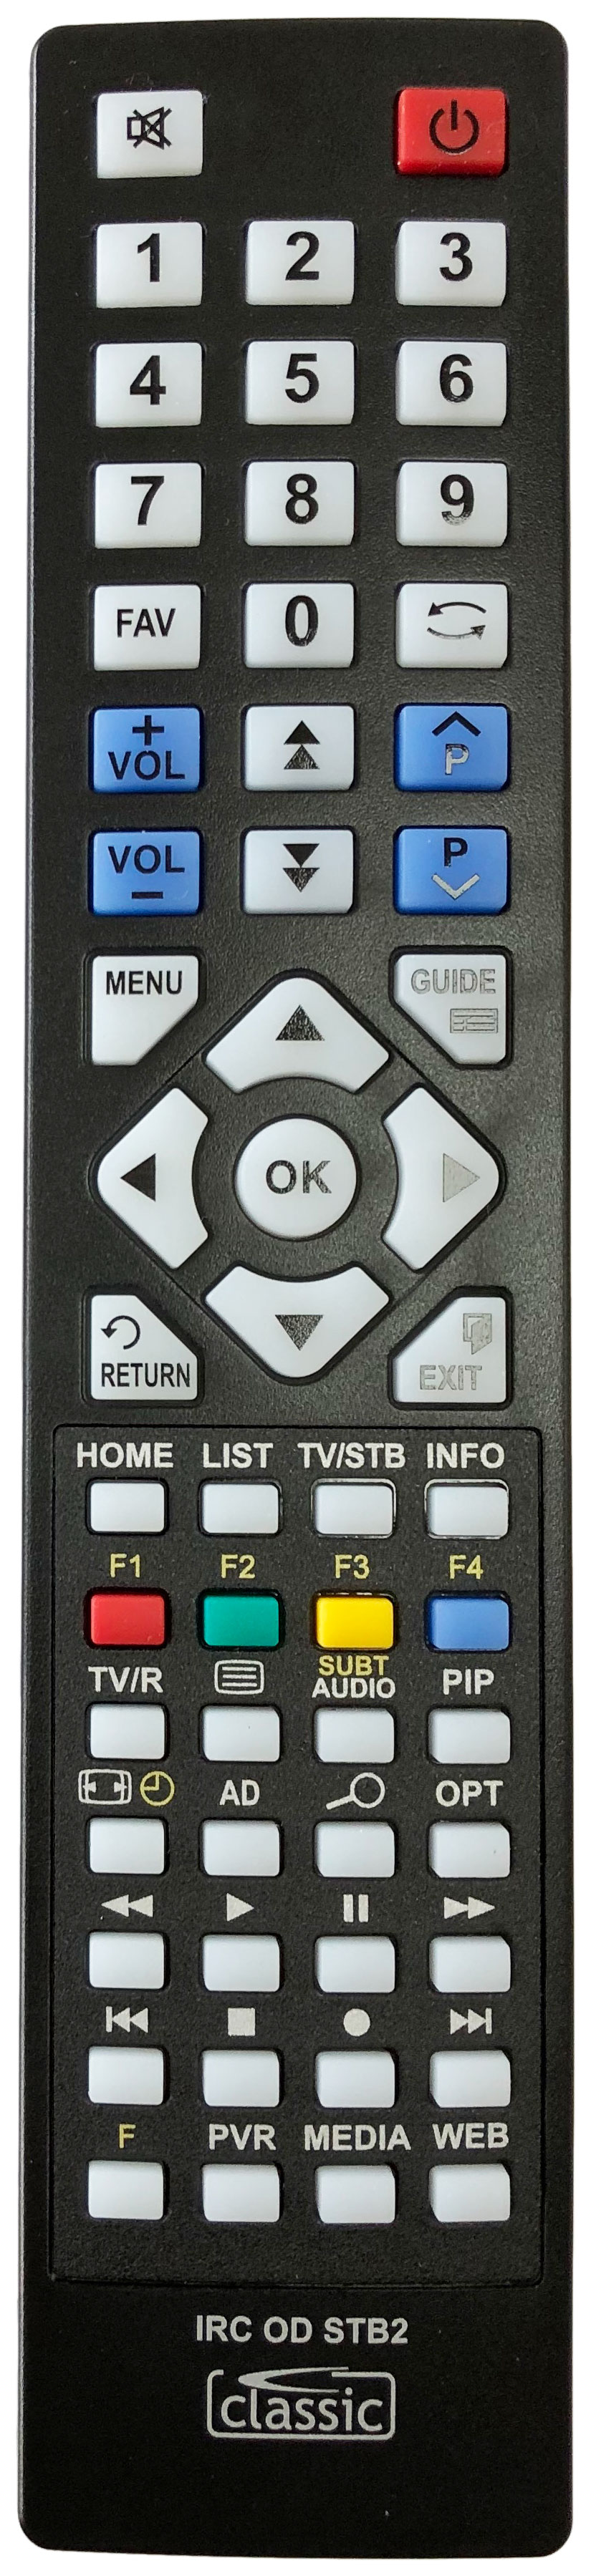 LOGISAT 1300 HD Remote Control Alternative